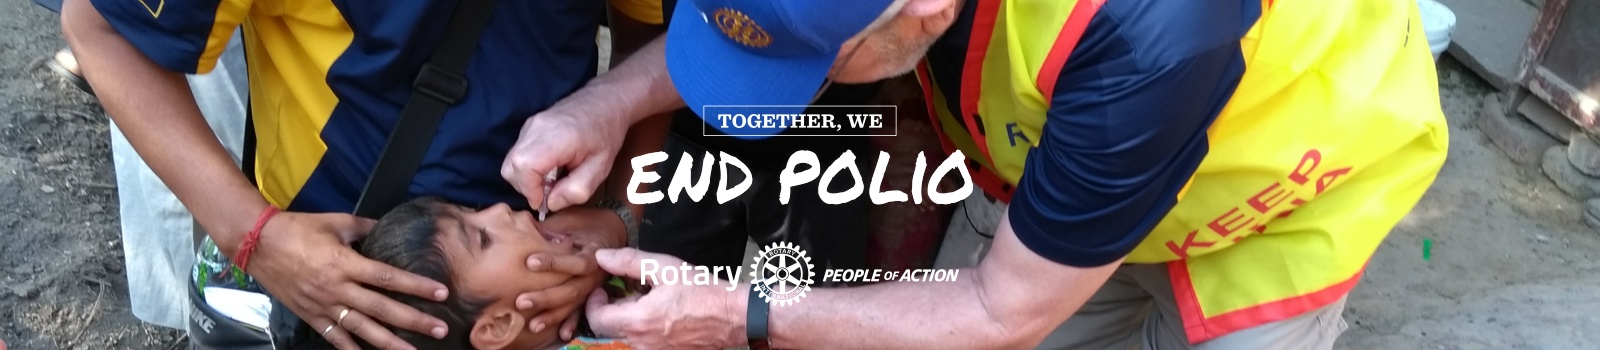 We End Polio